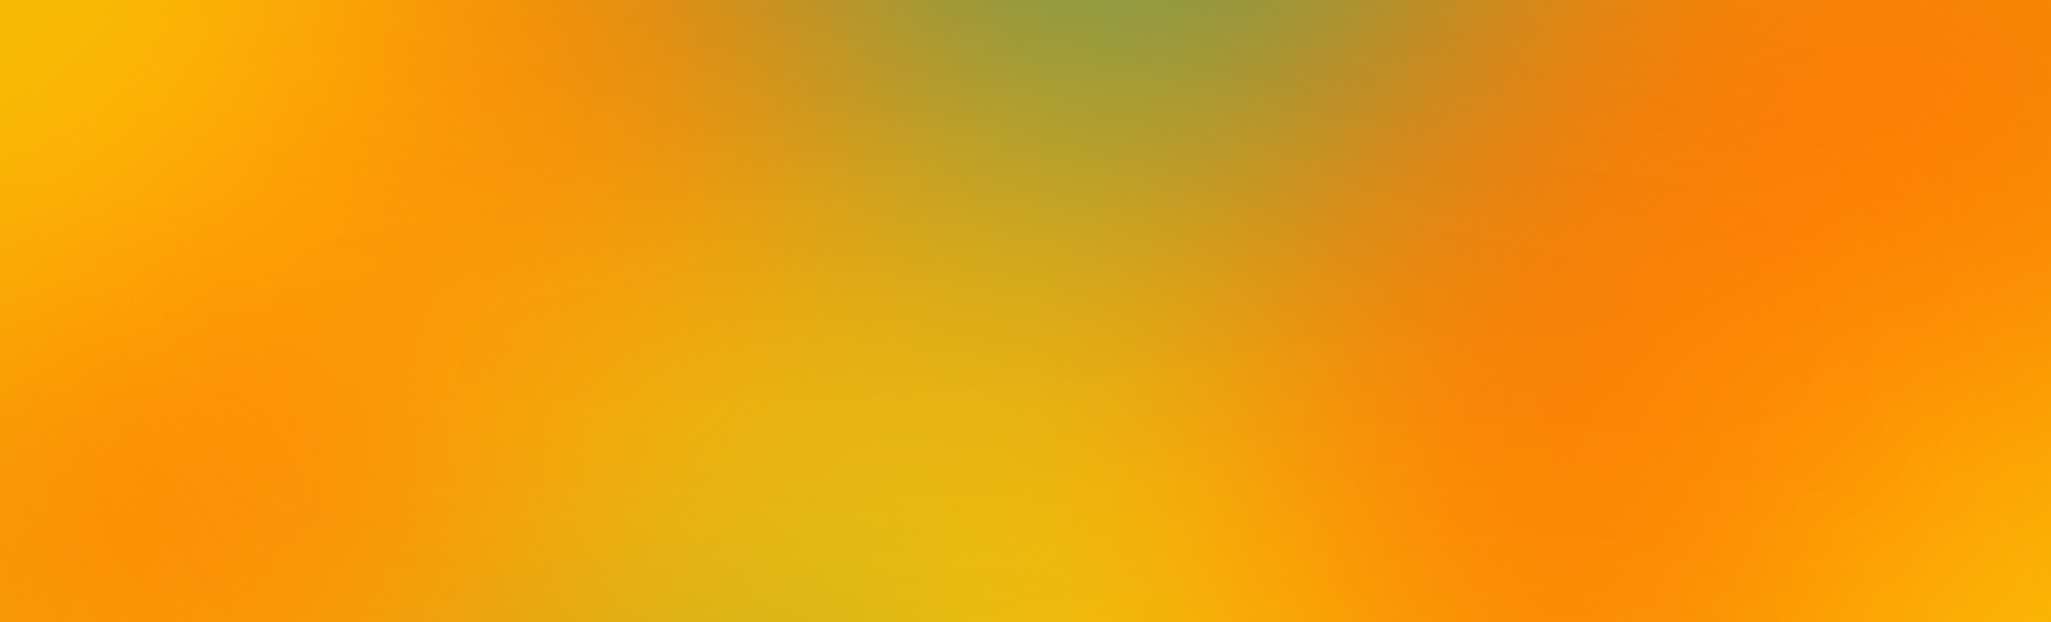 orange yellow and green gradient background